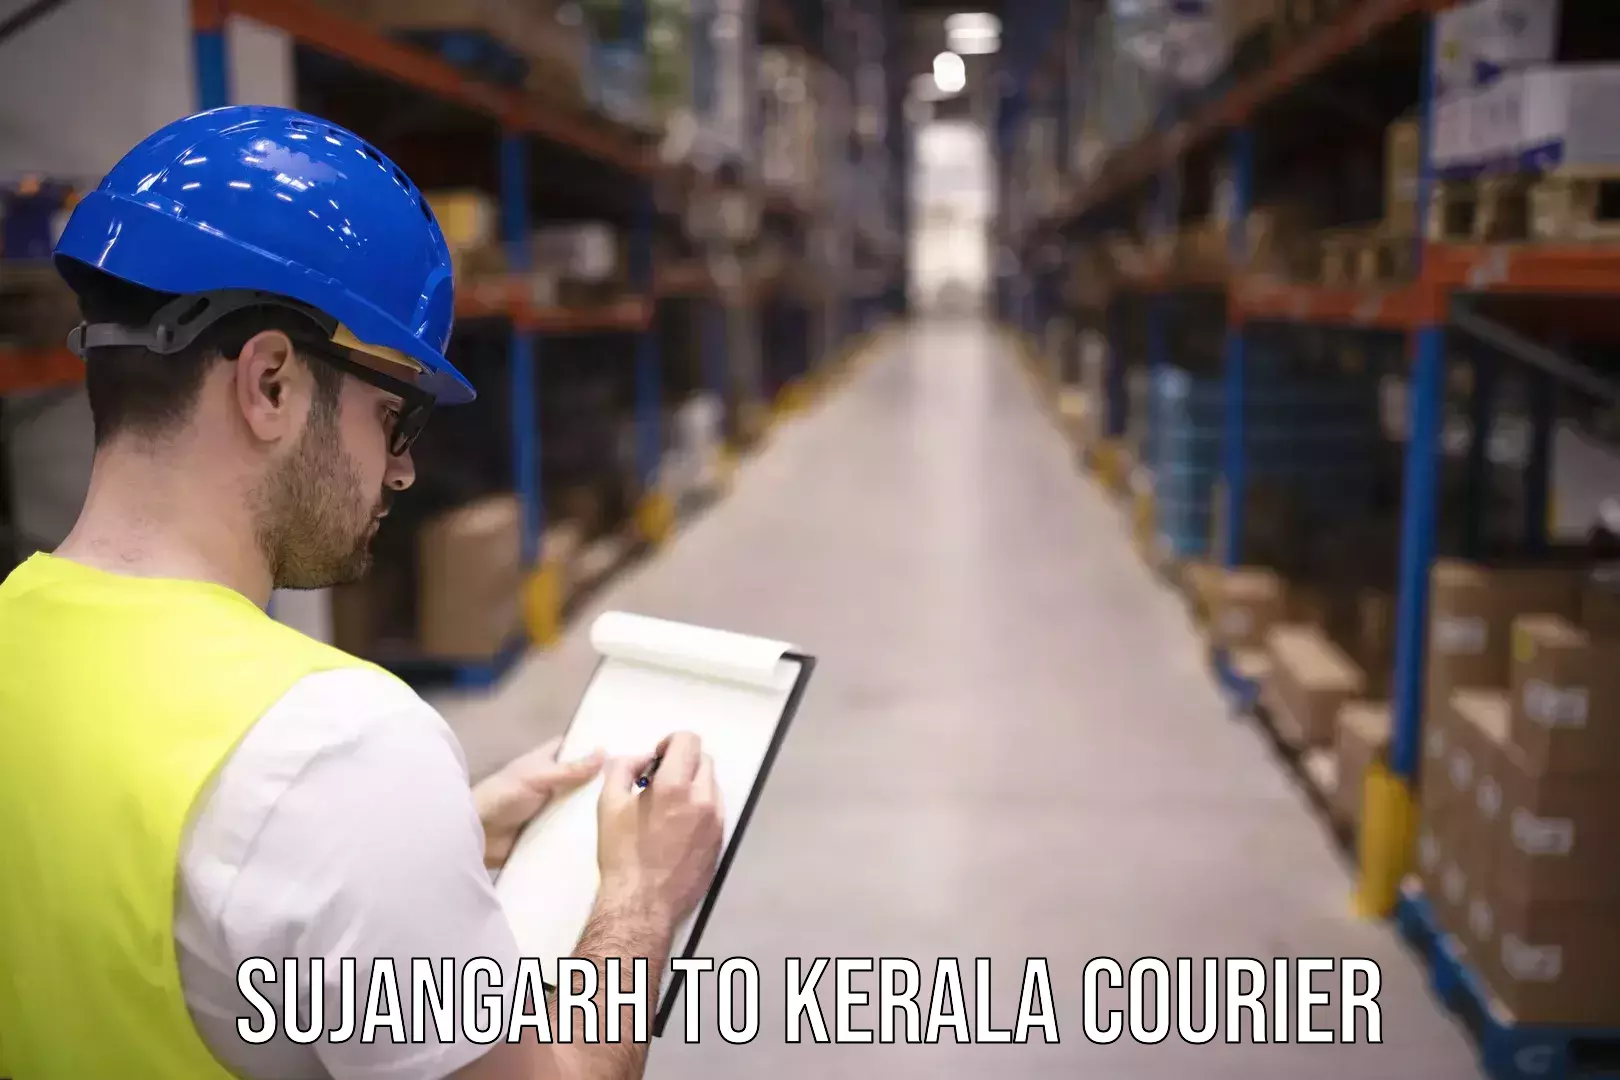 Bulk shipment Sujangarh to Kerala